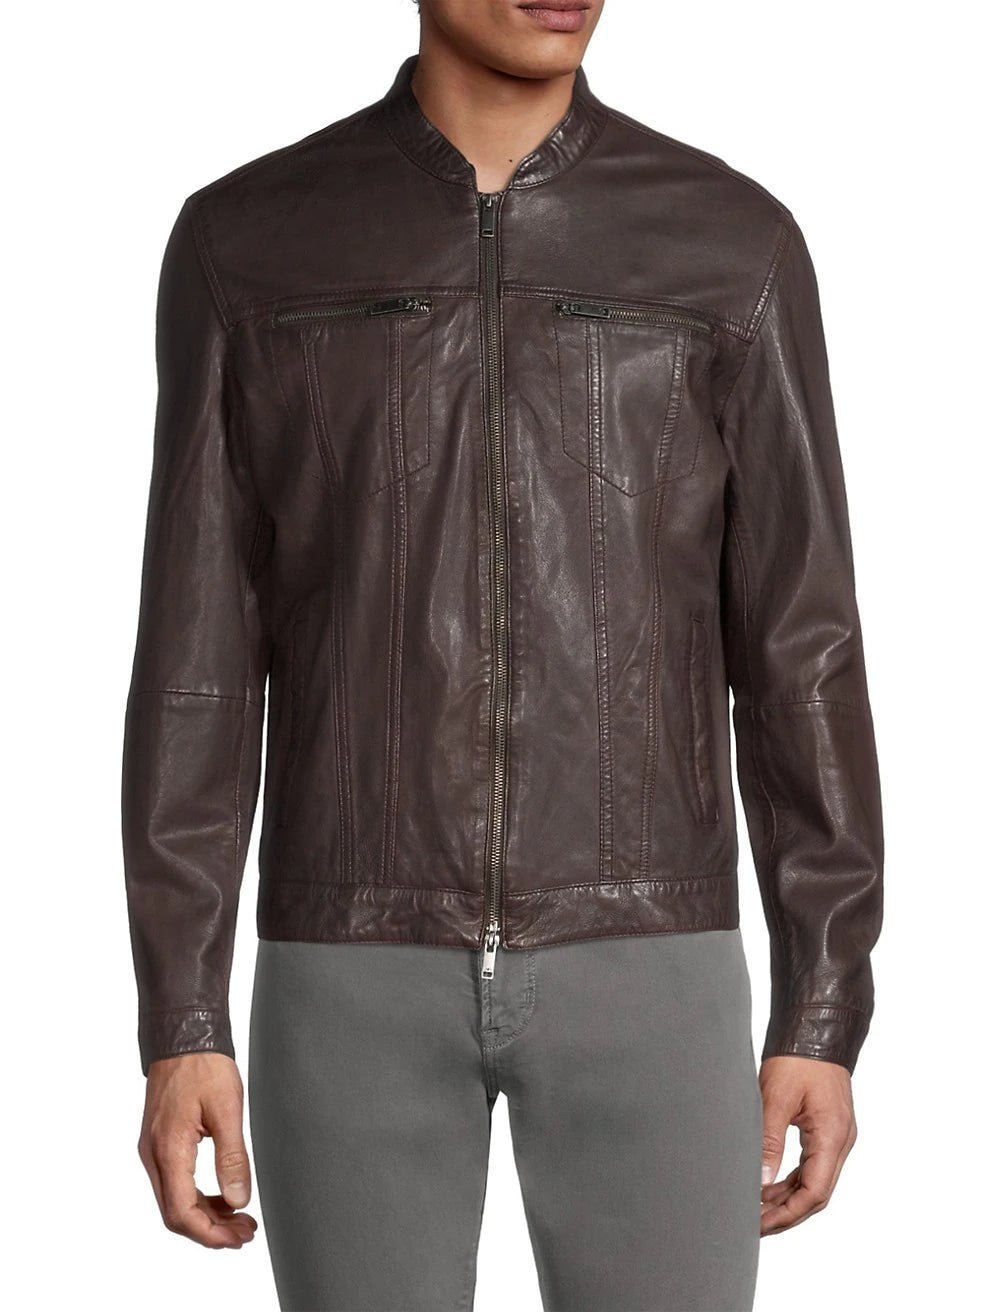 John Varvatos Band Collar Leather Jacket in Brown - Estilo Boutique